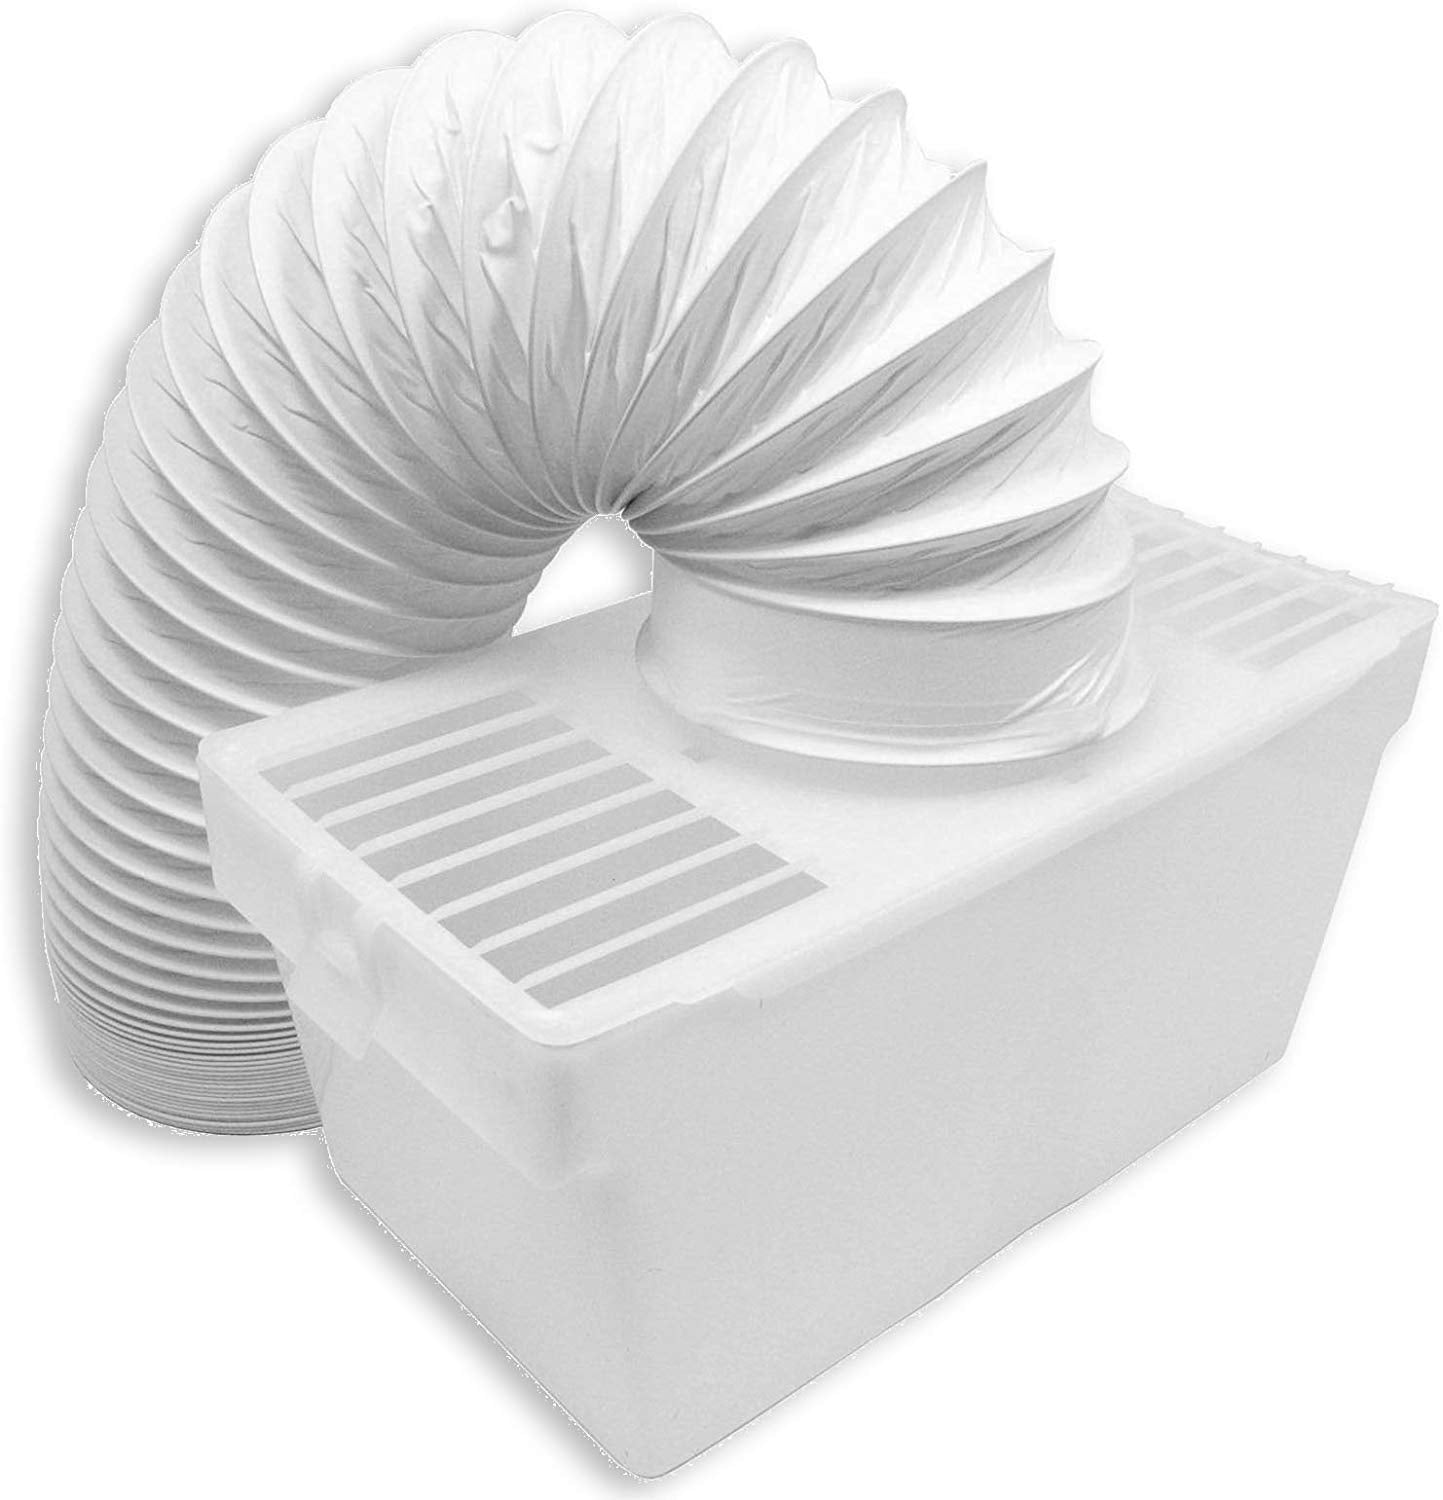 Condenser Vent Box & Hose Kit for Miele Vented Tumble Dryers (1.5m / 4" Diameter)